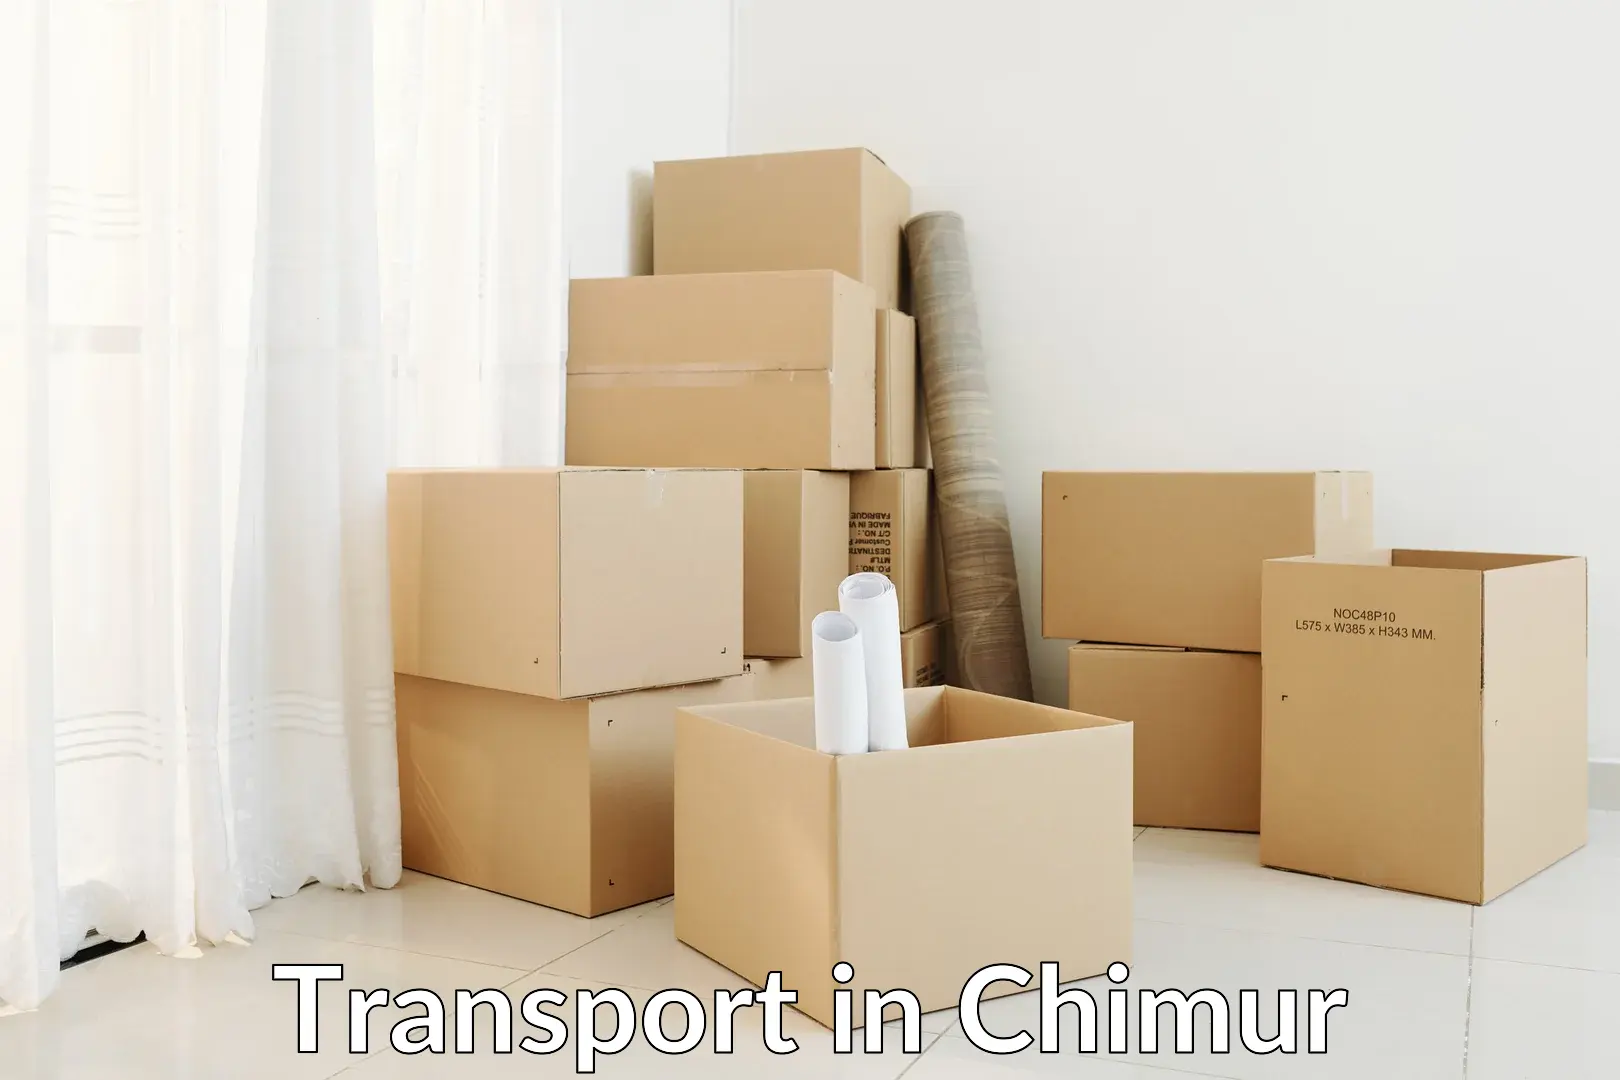 Interstate goods transport in Chimur